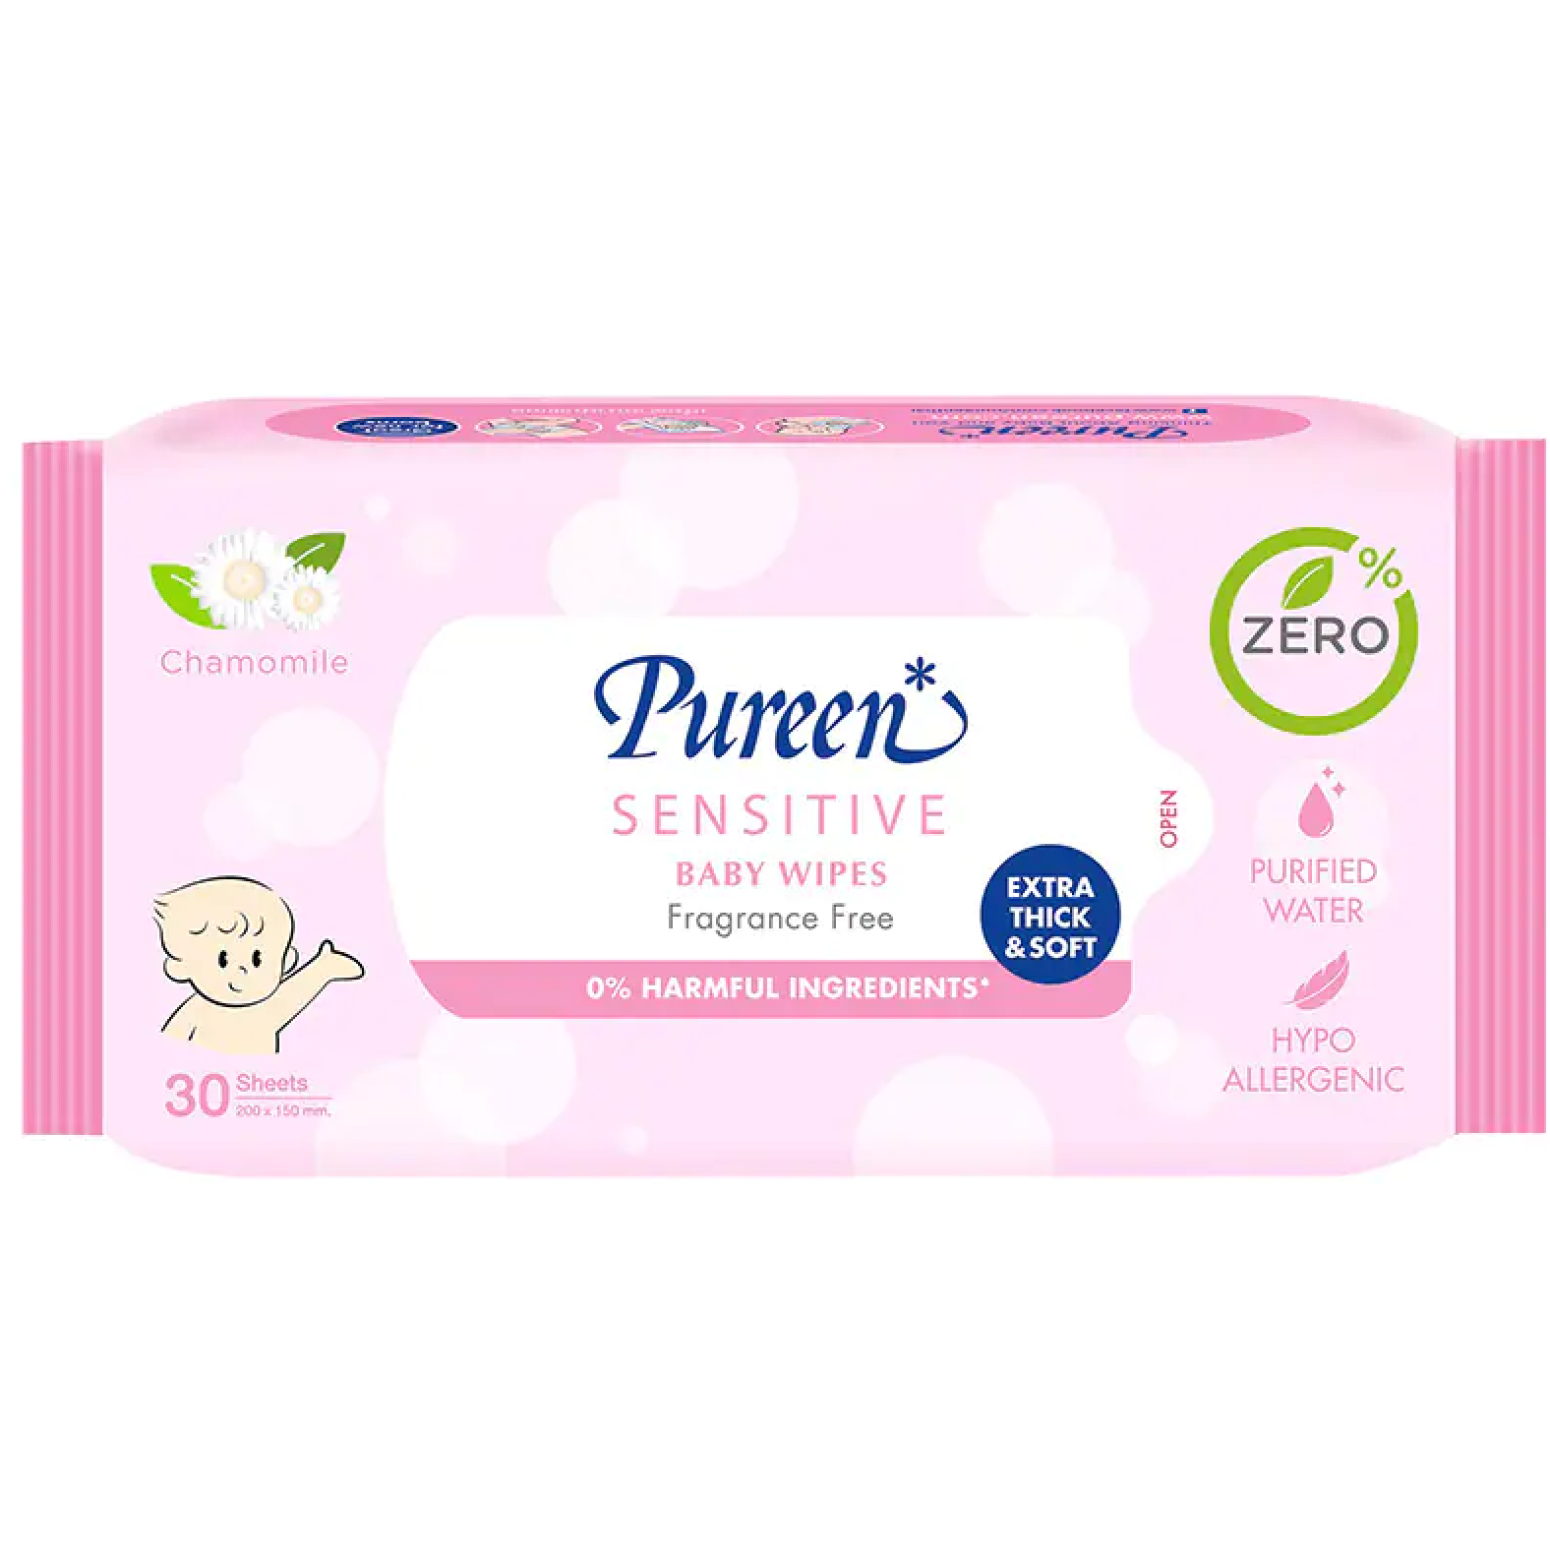 Pureen Baby Wipes Sensitive 30sheets